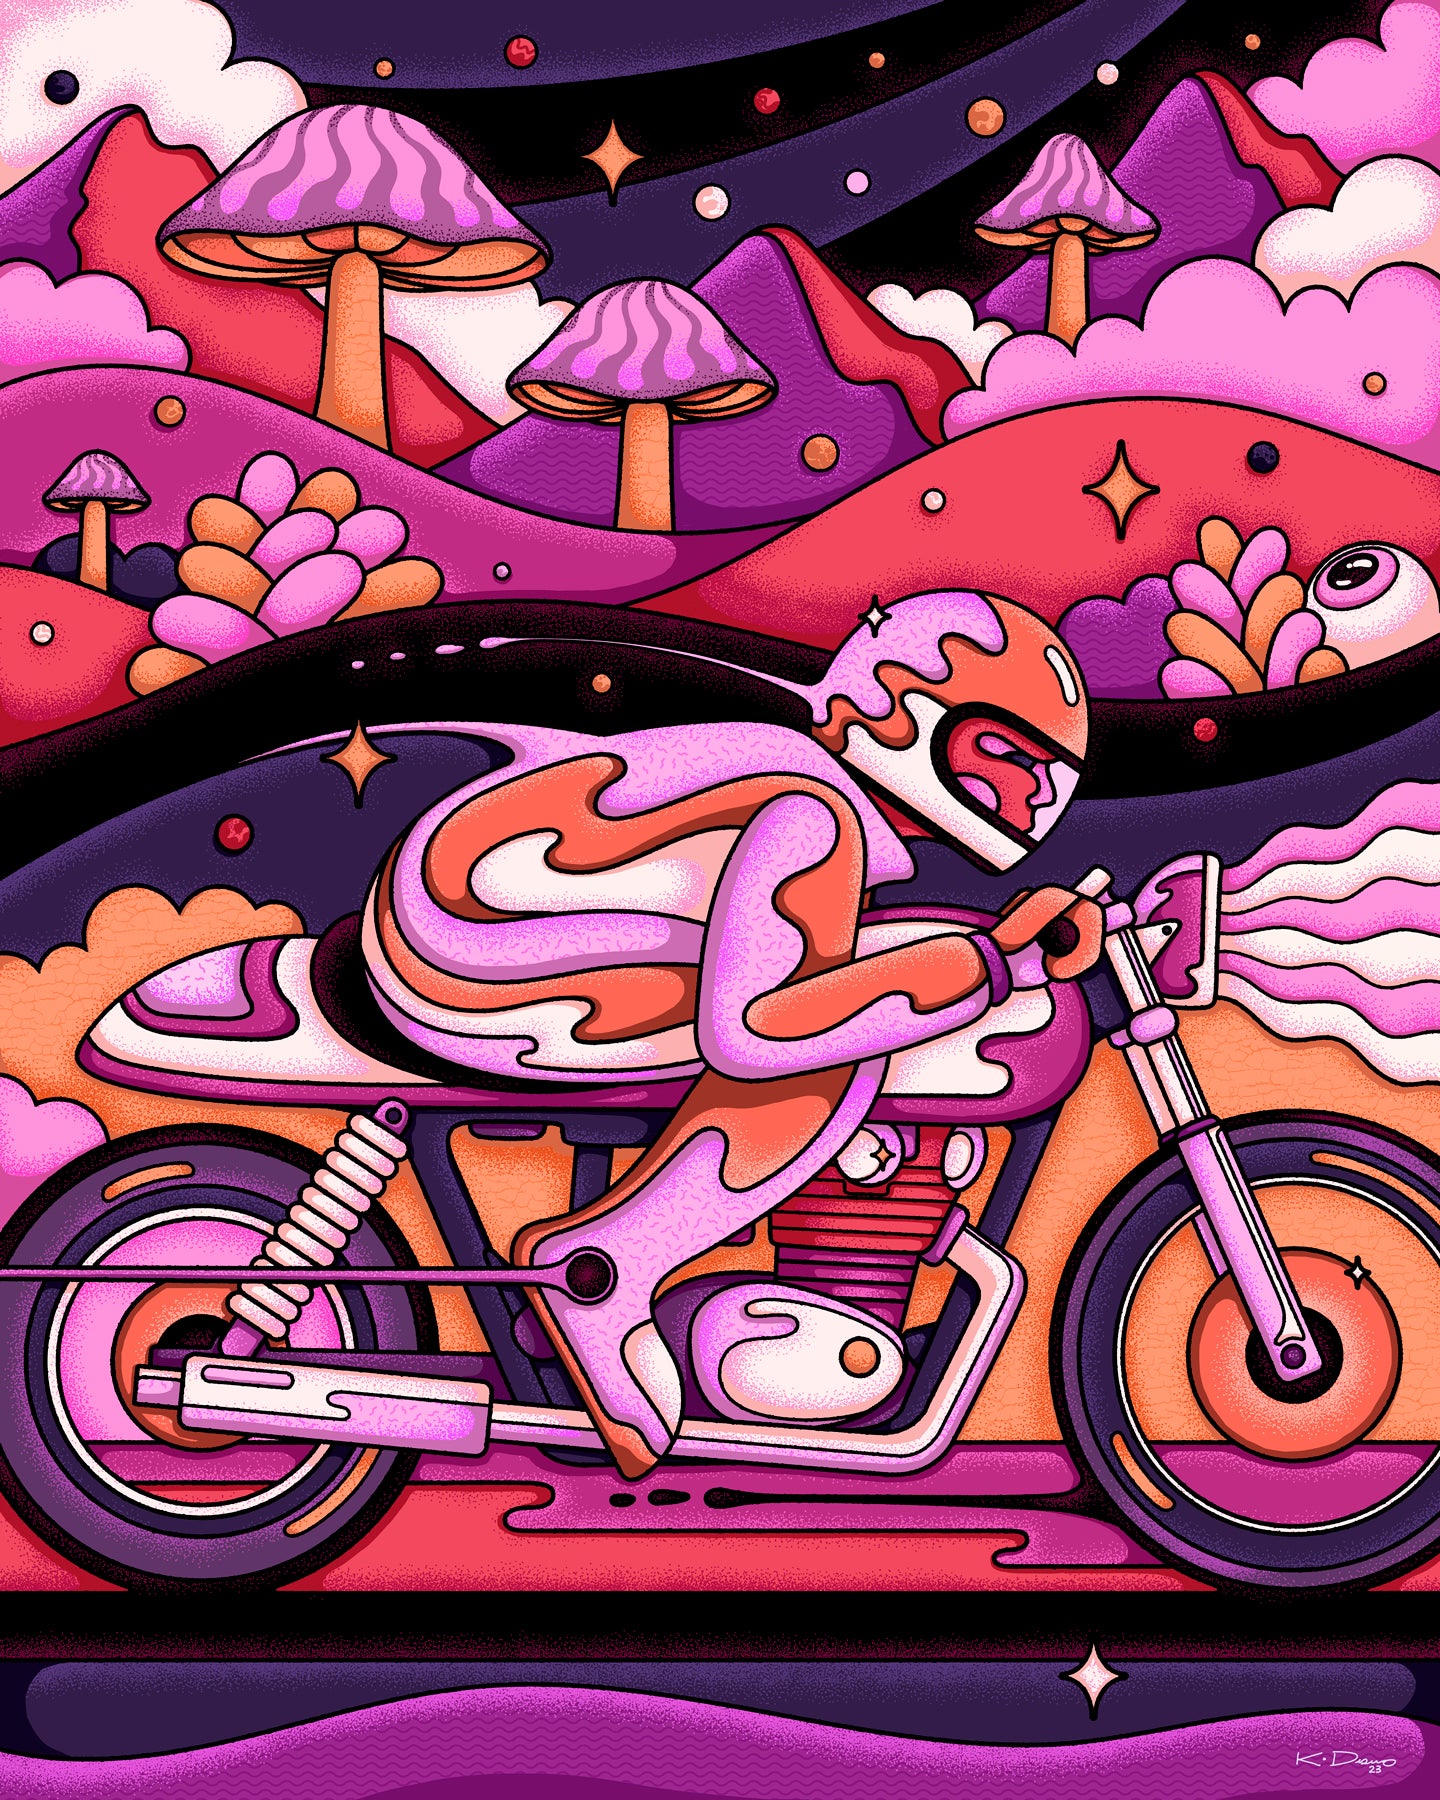 Kurt Diserio Pittsburgh artist psychedelic trippy motorcycle cafe racer art yamaha xs650